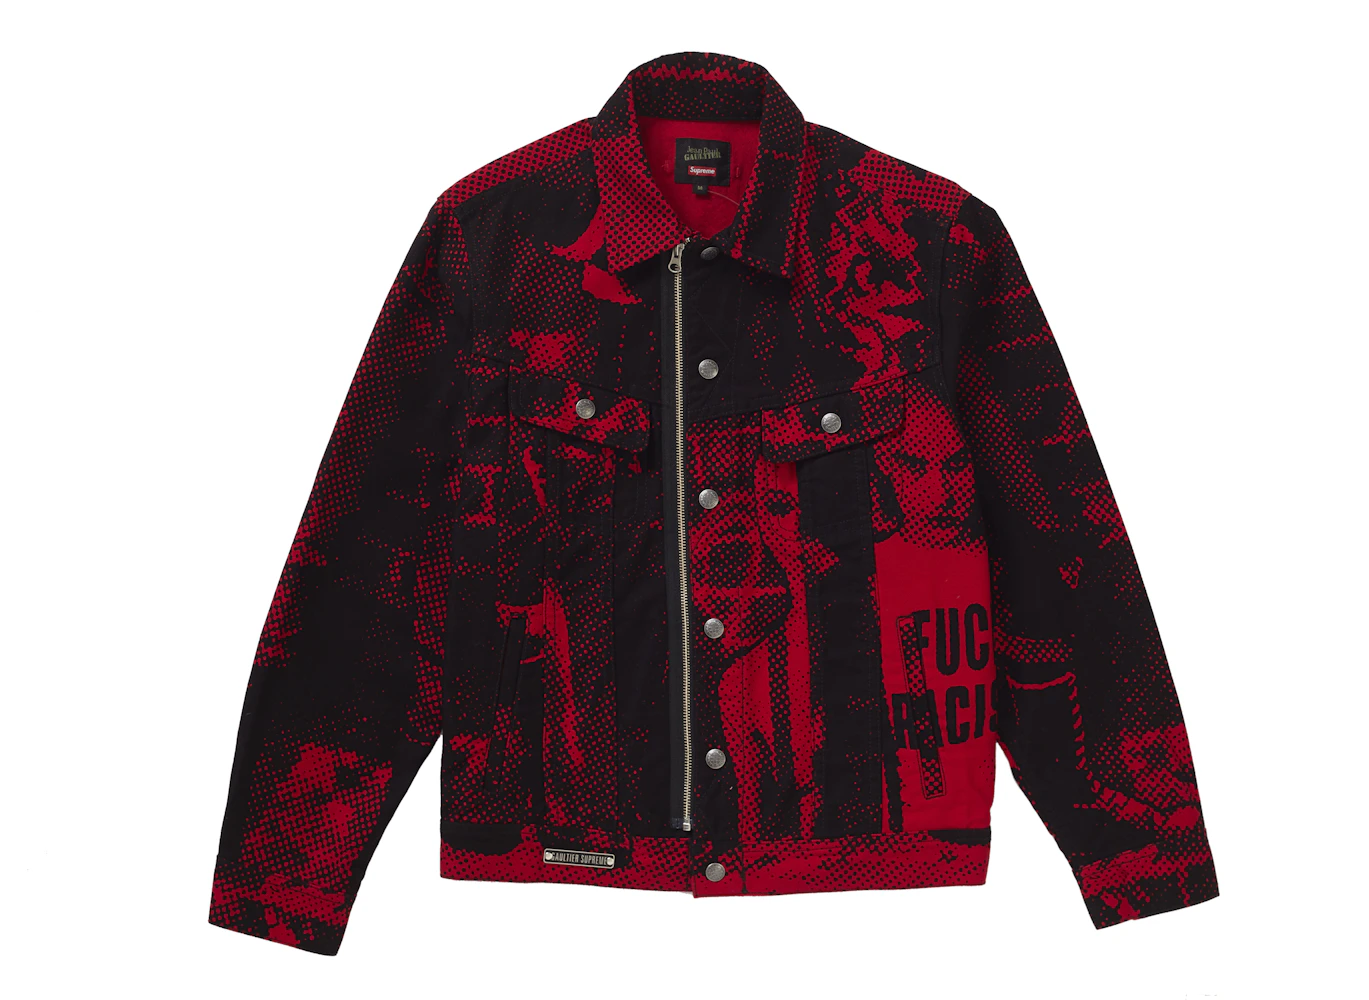 SS19 #Supreme x Jean Paul Gaultier 'Fuck Racism' Denim Jacket Sporting